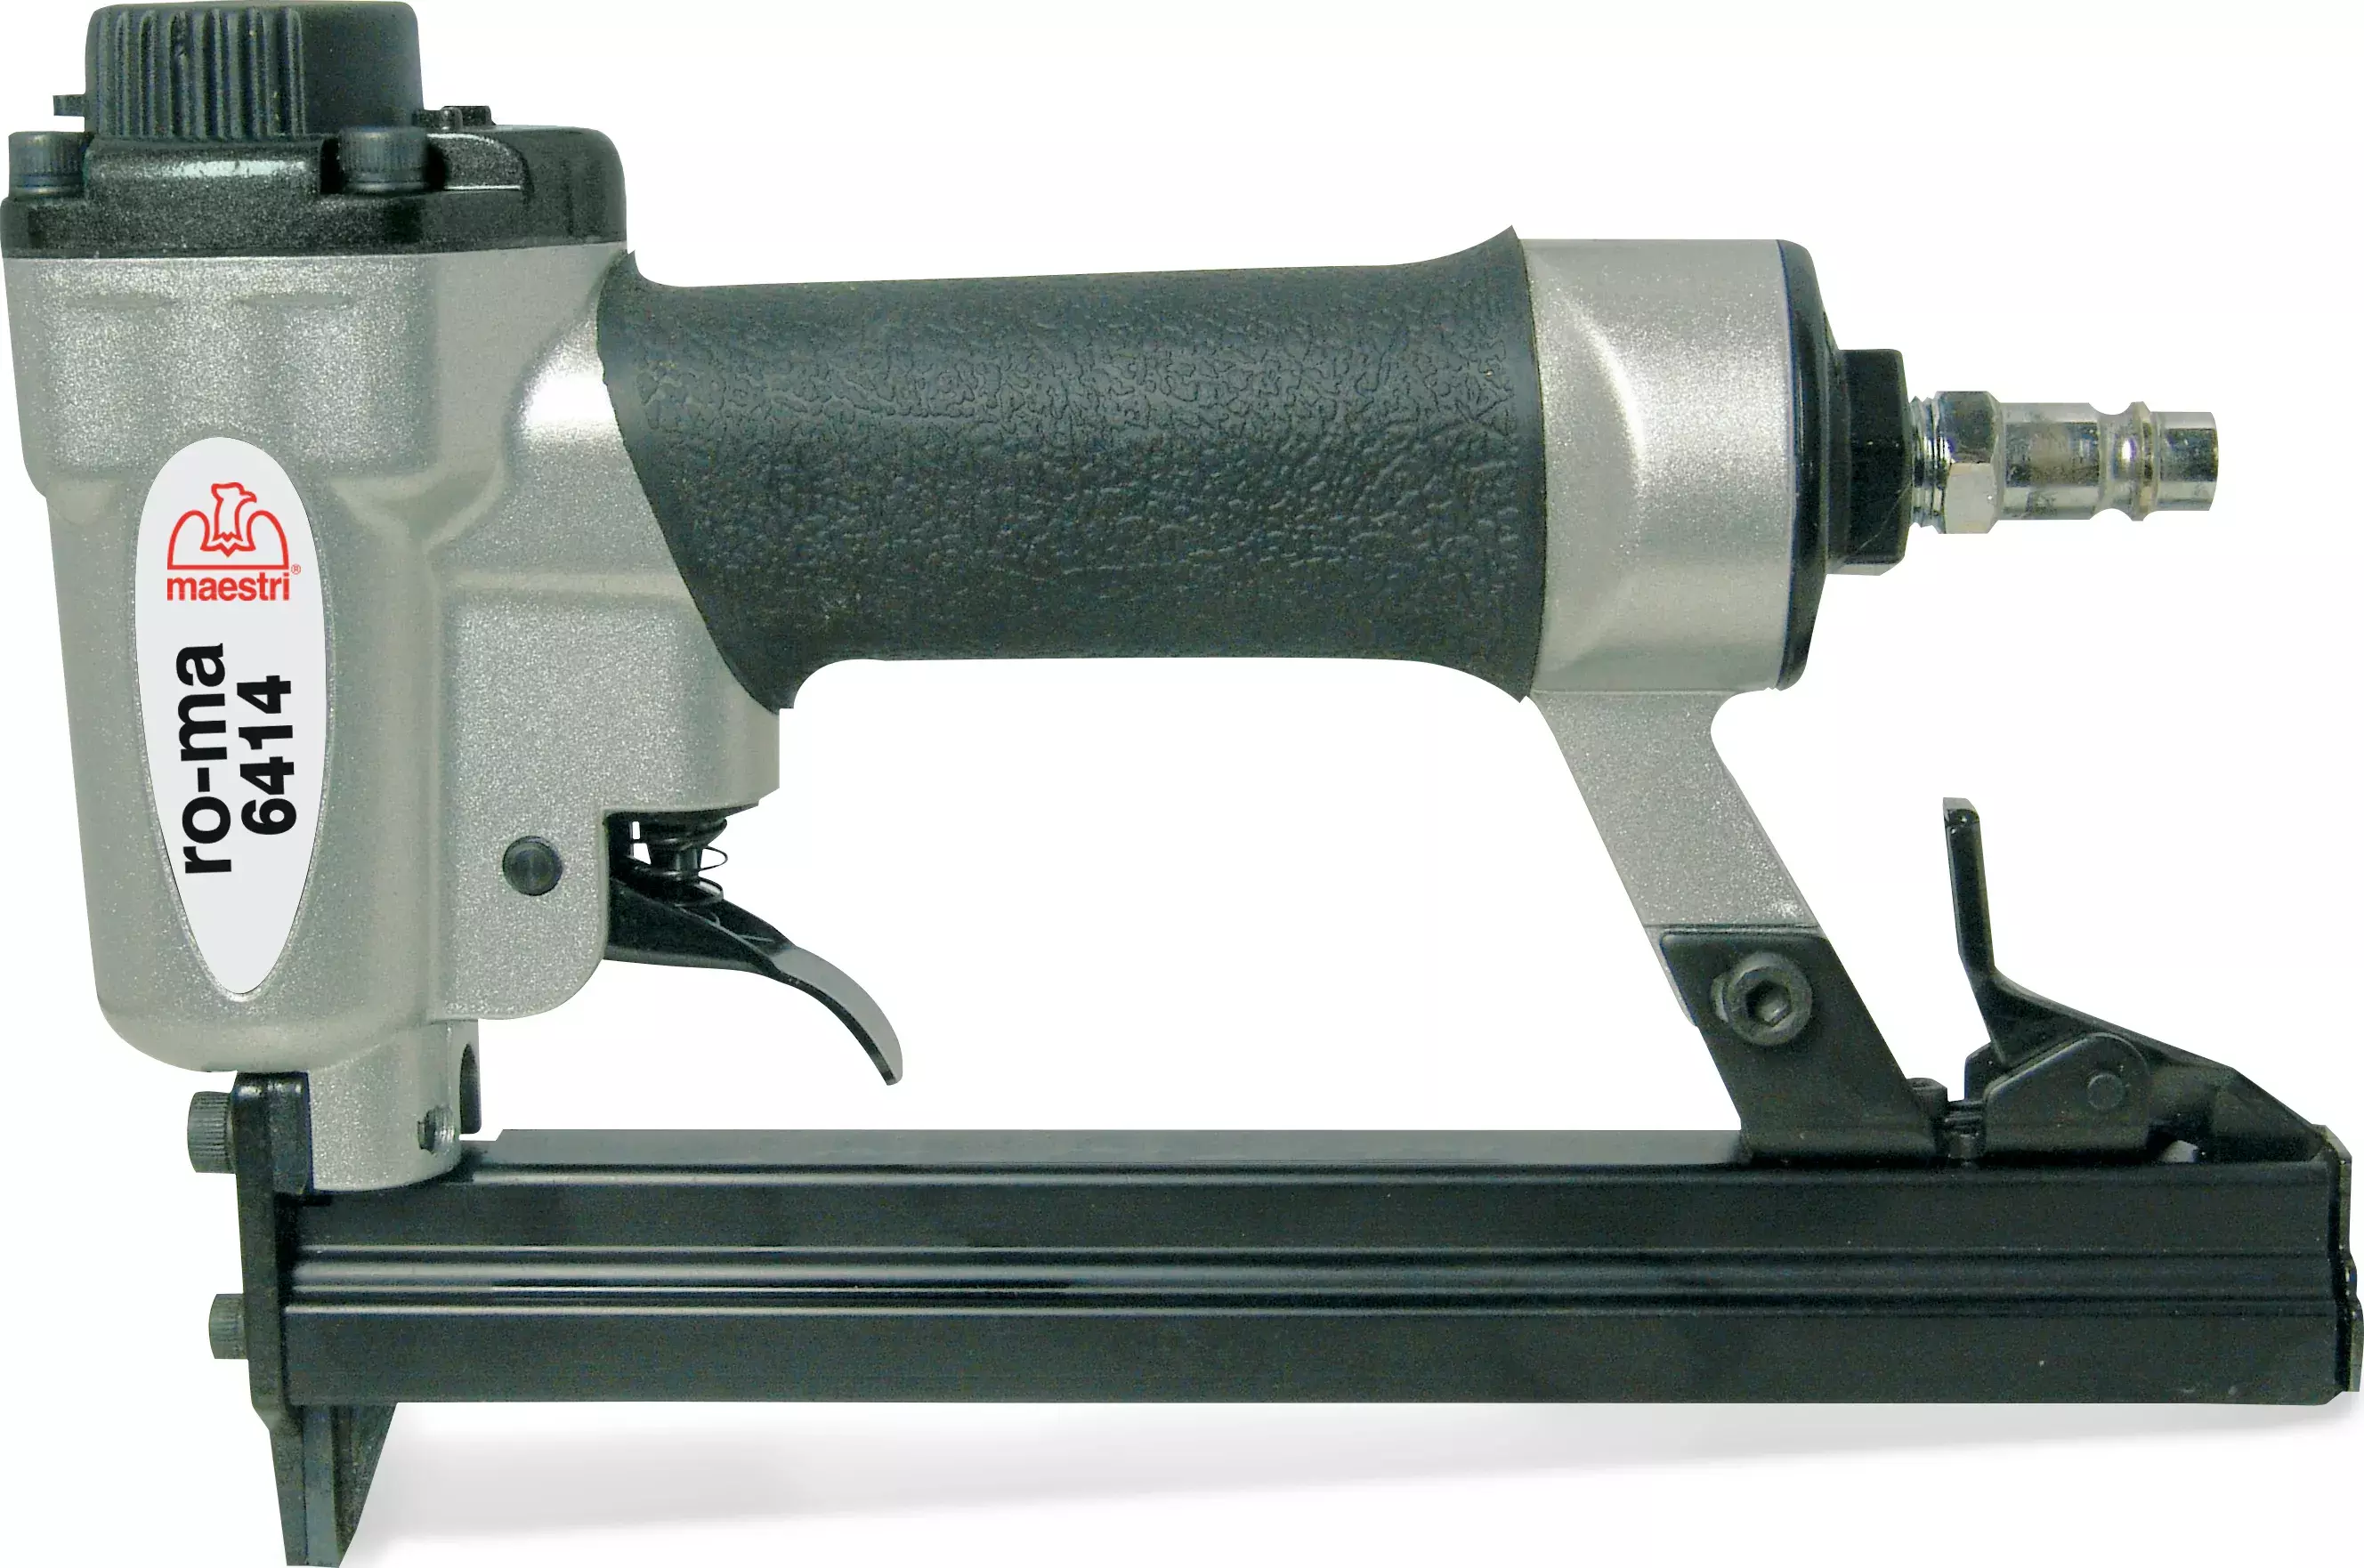 gbc Fissatrice pneumatica, utilizza punti da 64/4 a 64/14 mm ROM0153145.